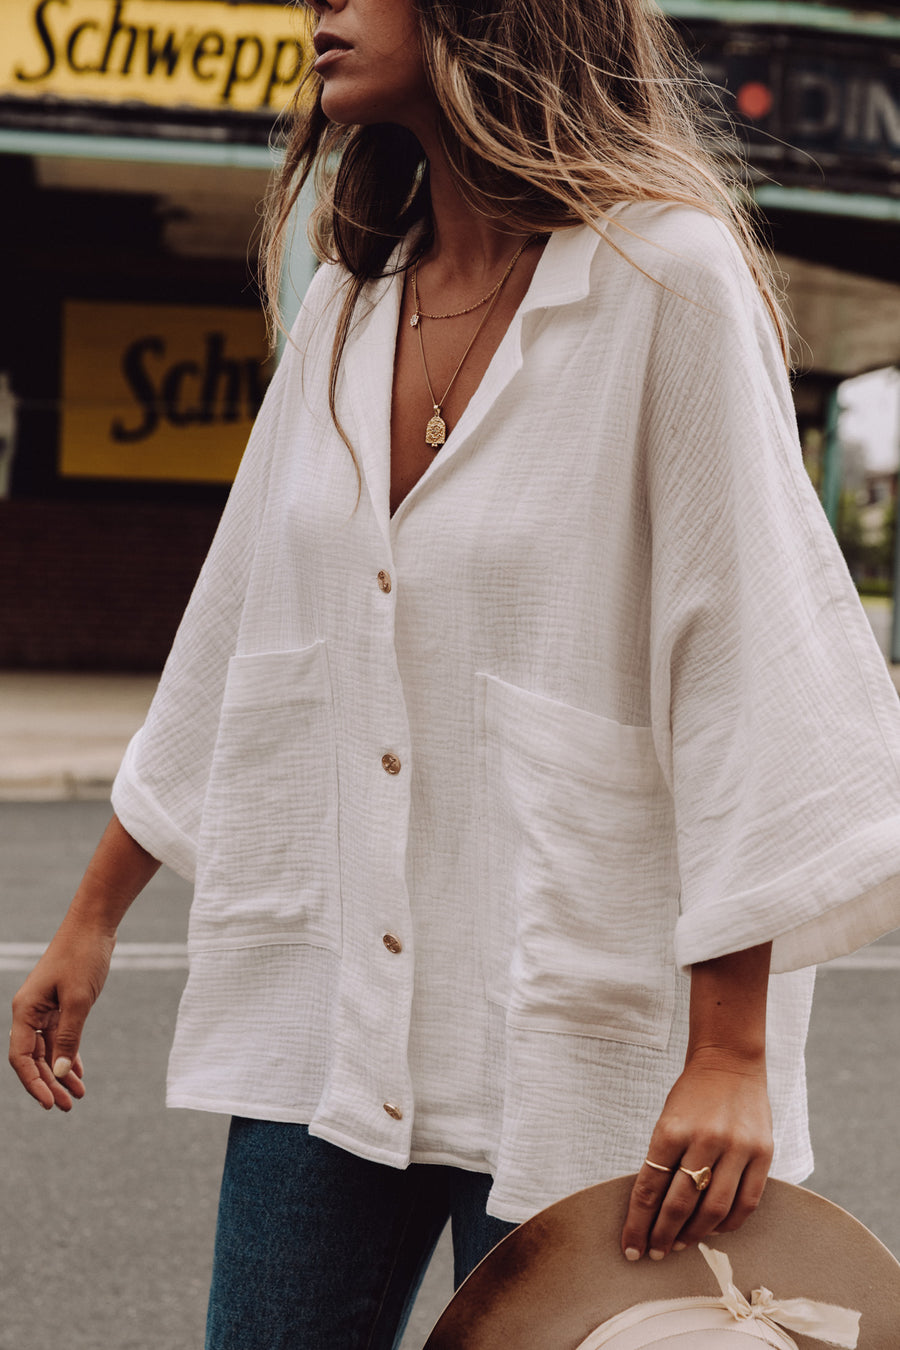 BRELLA - Women White Short Sleeve Shirt